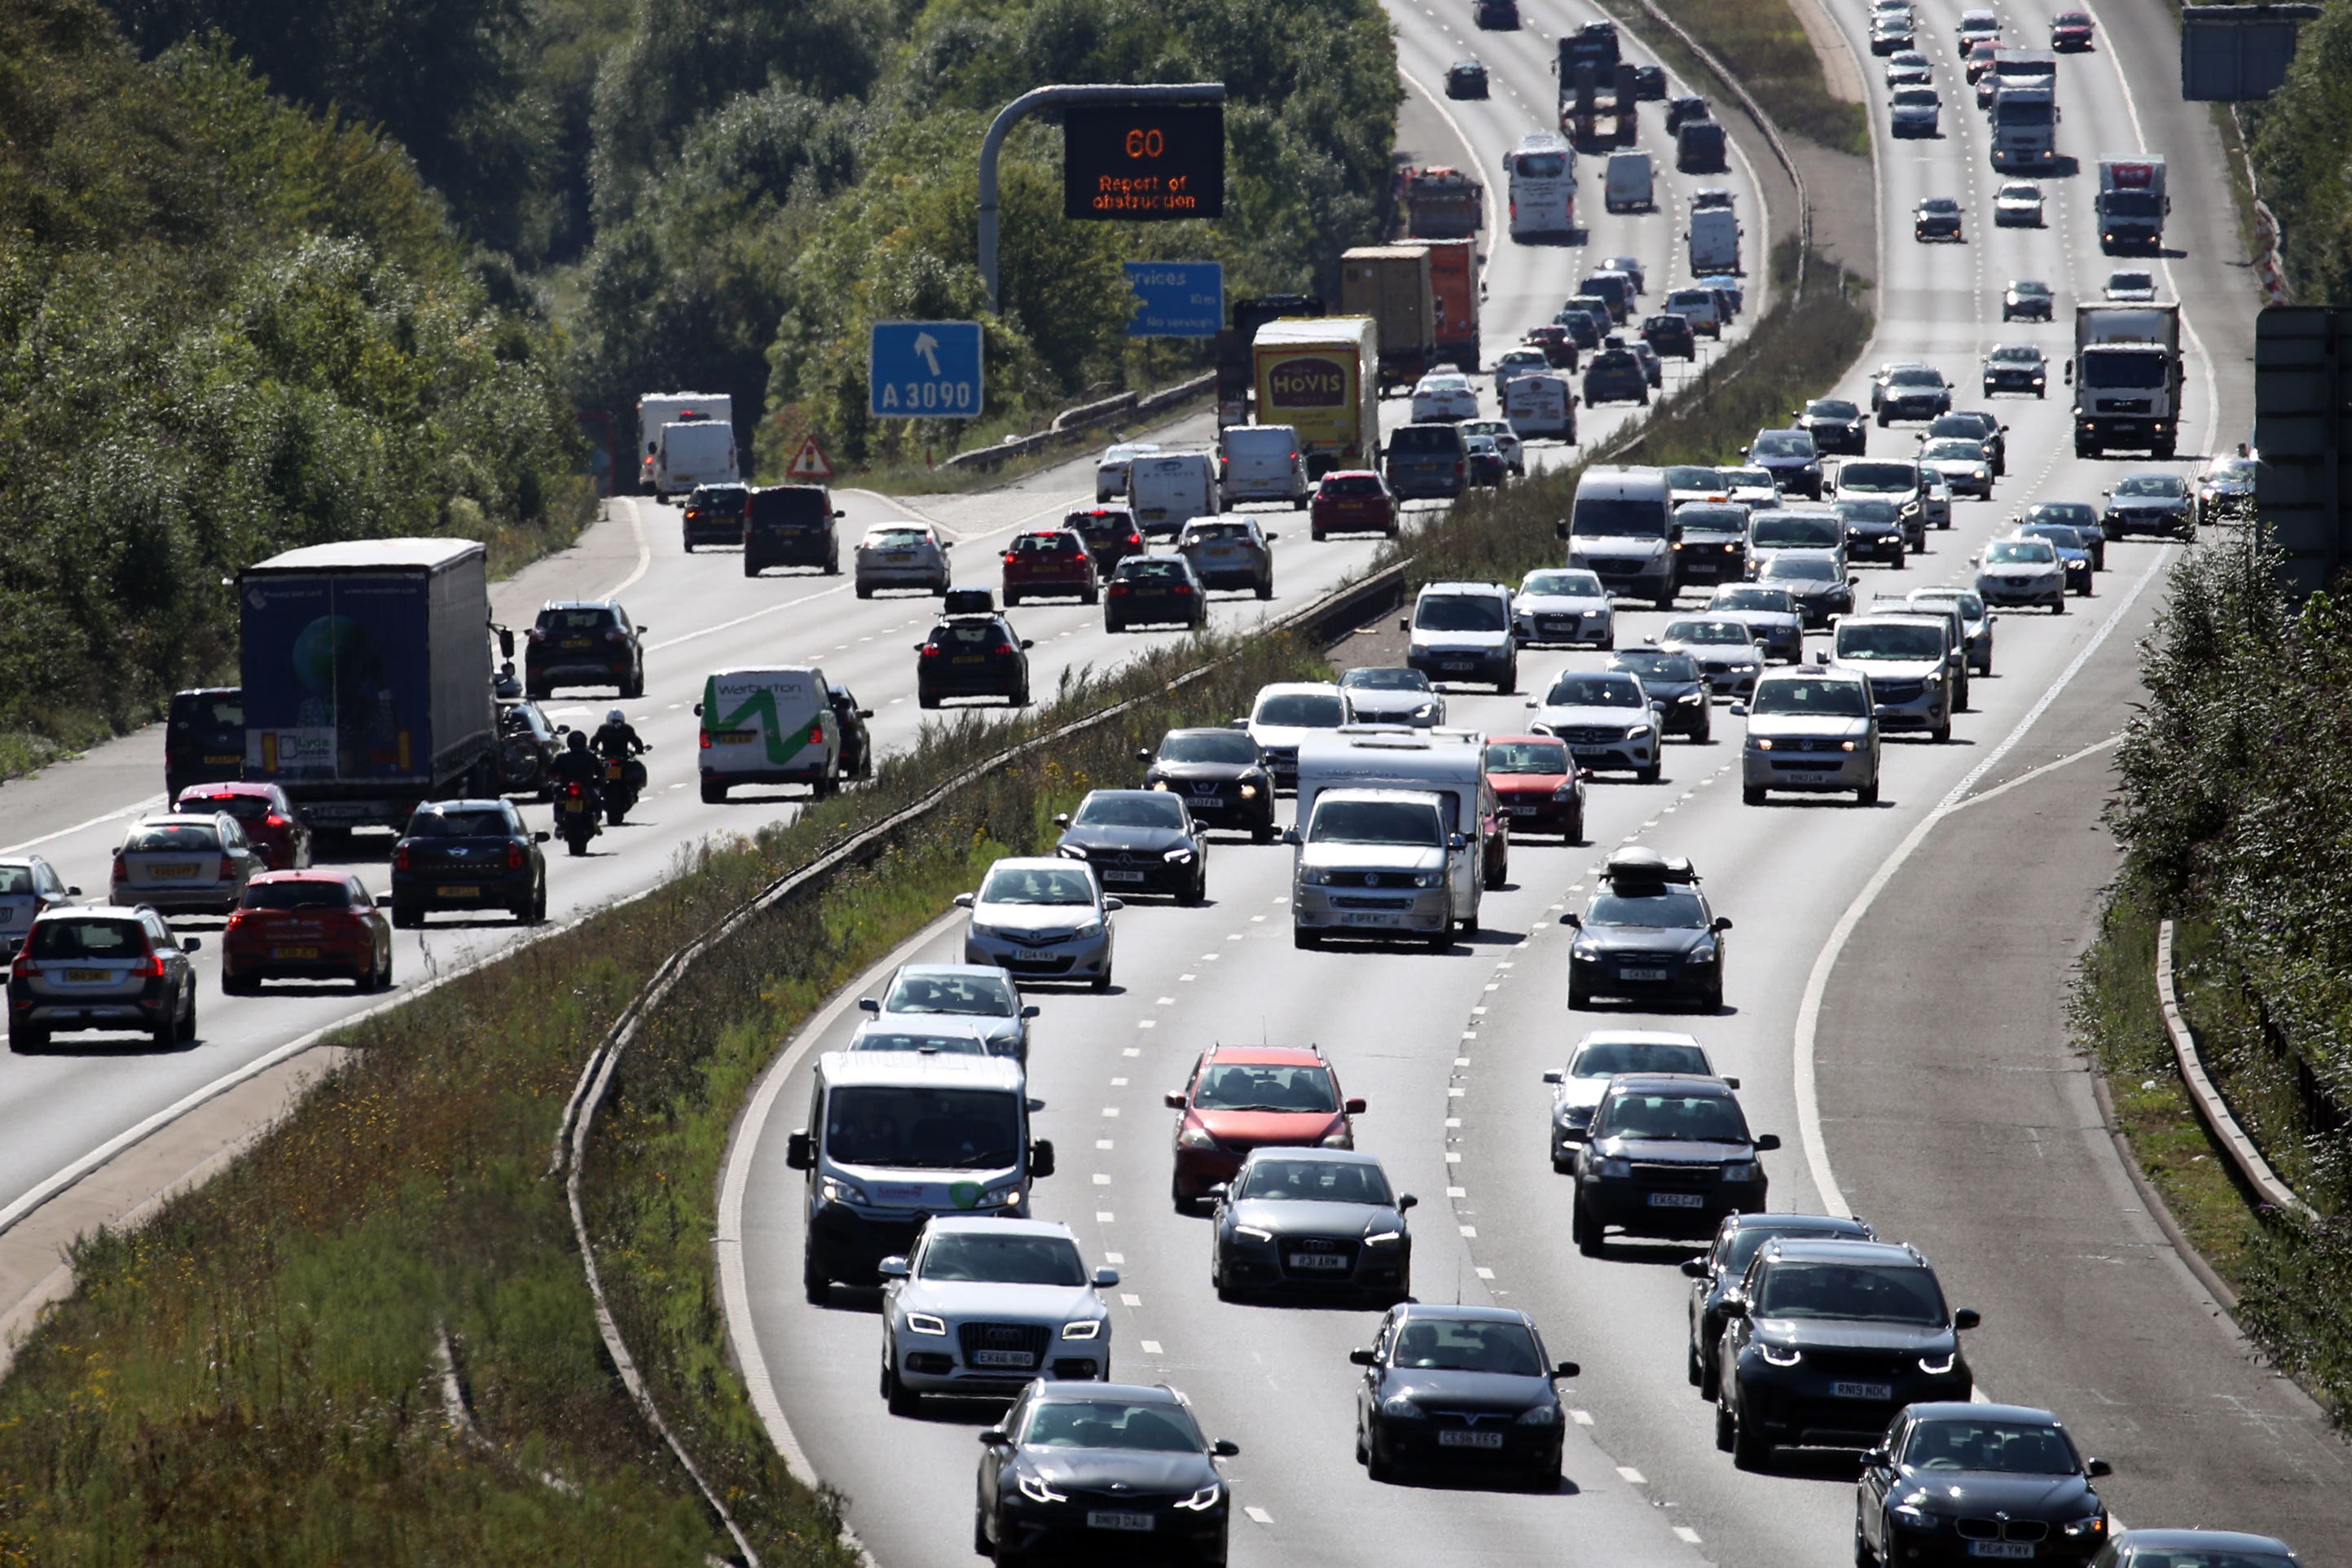 Around 10 per cent of England’s motorway network is made up of smart motorways